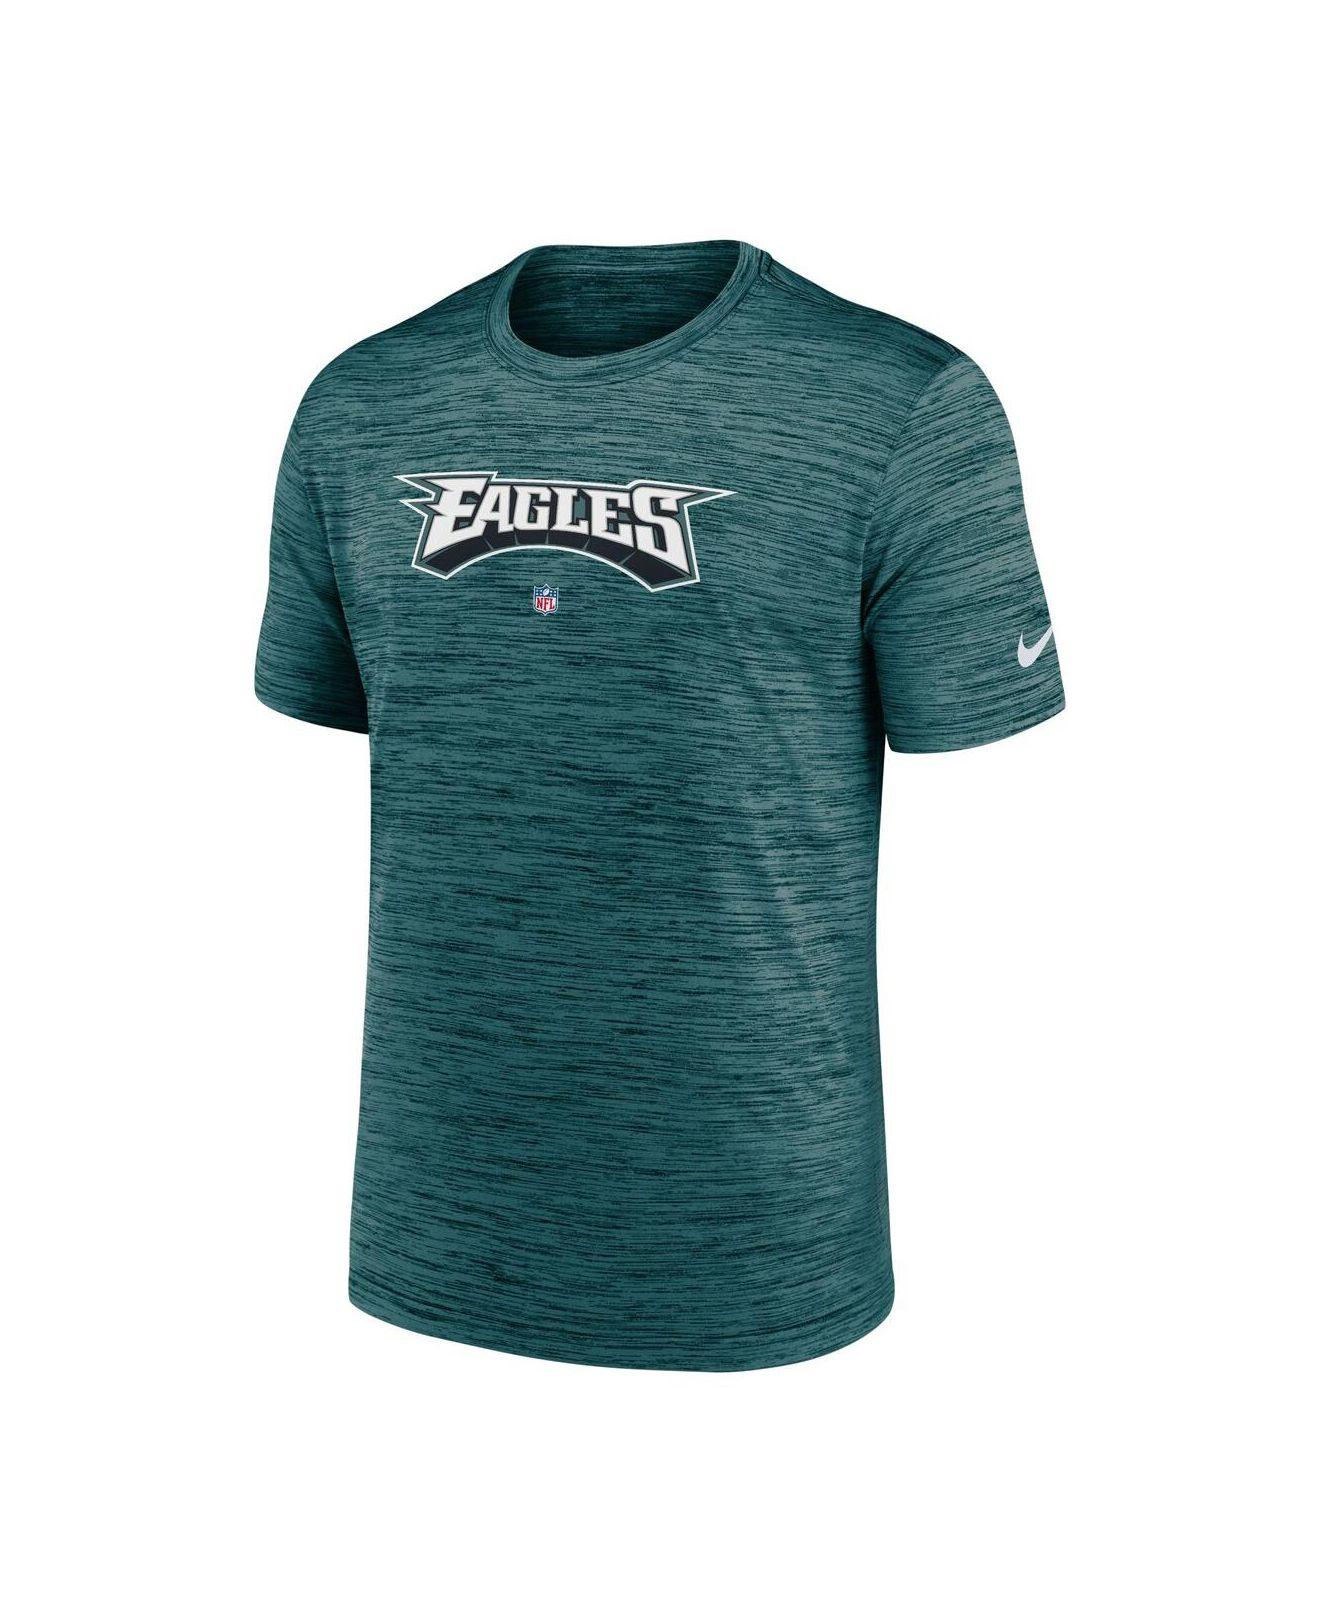 Randy Johnson Seattle Mariners Legends Men's Nike MLB T-Shirt